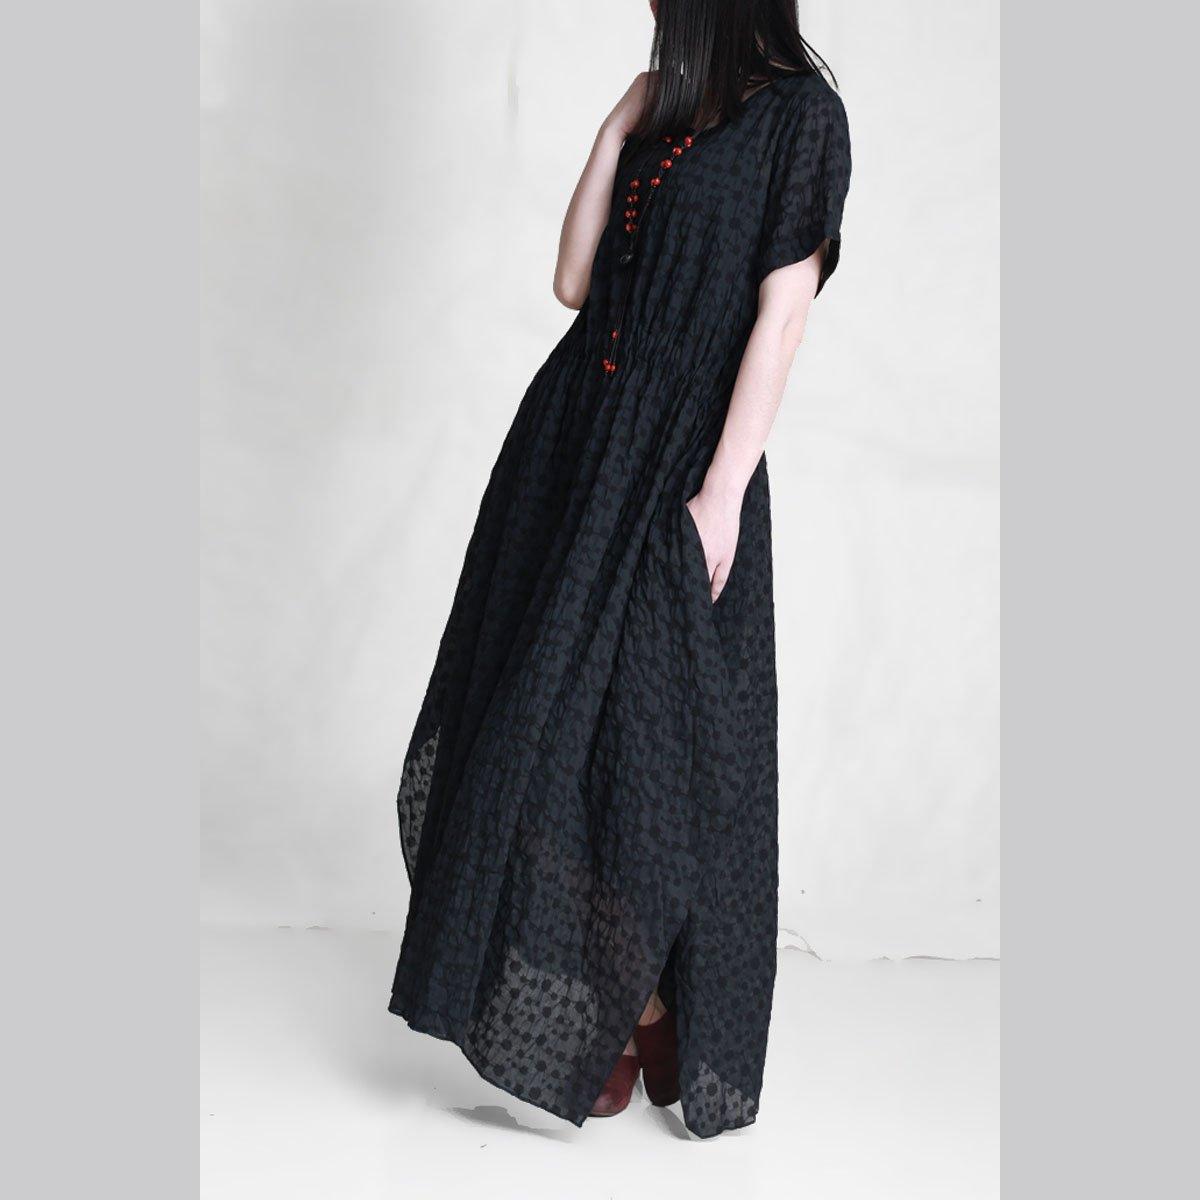 Vivid black dotted linen cotton dresses o neck asymmetric long summer Dresses - Omychic